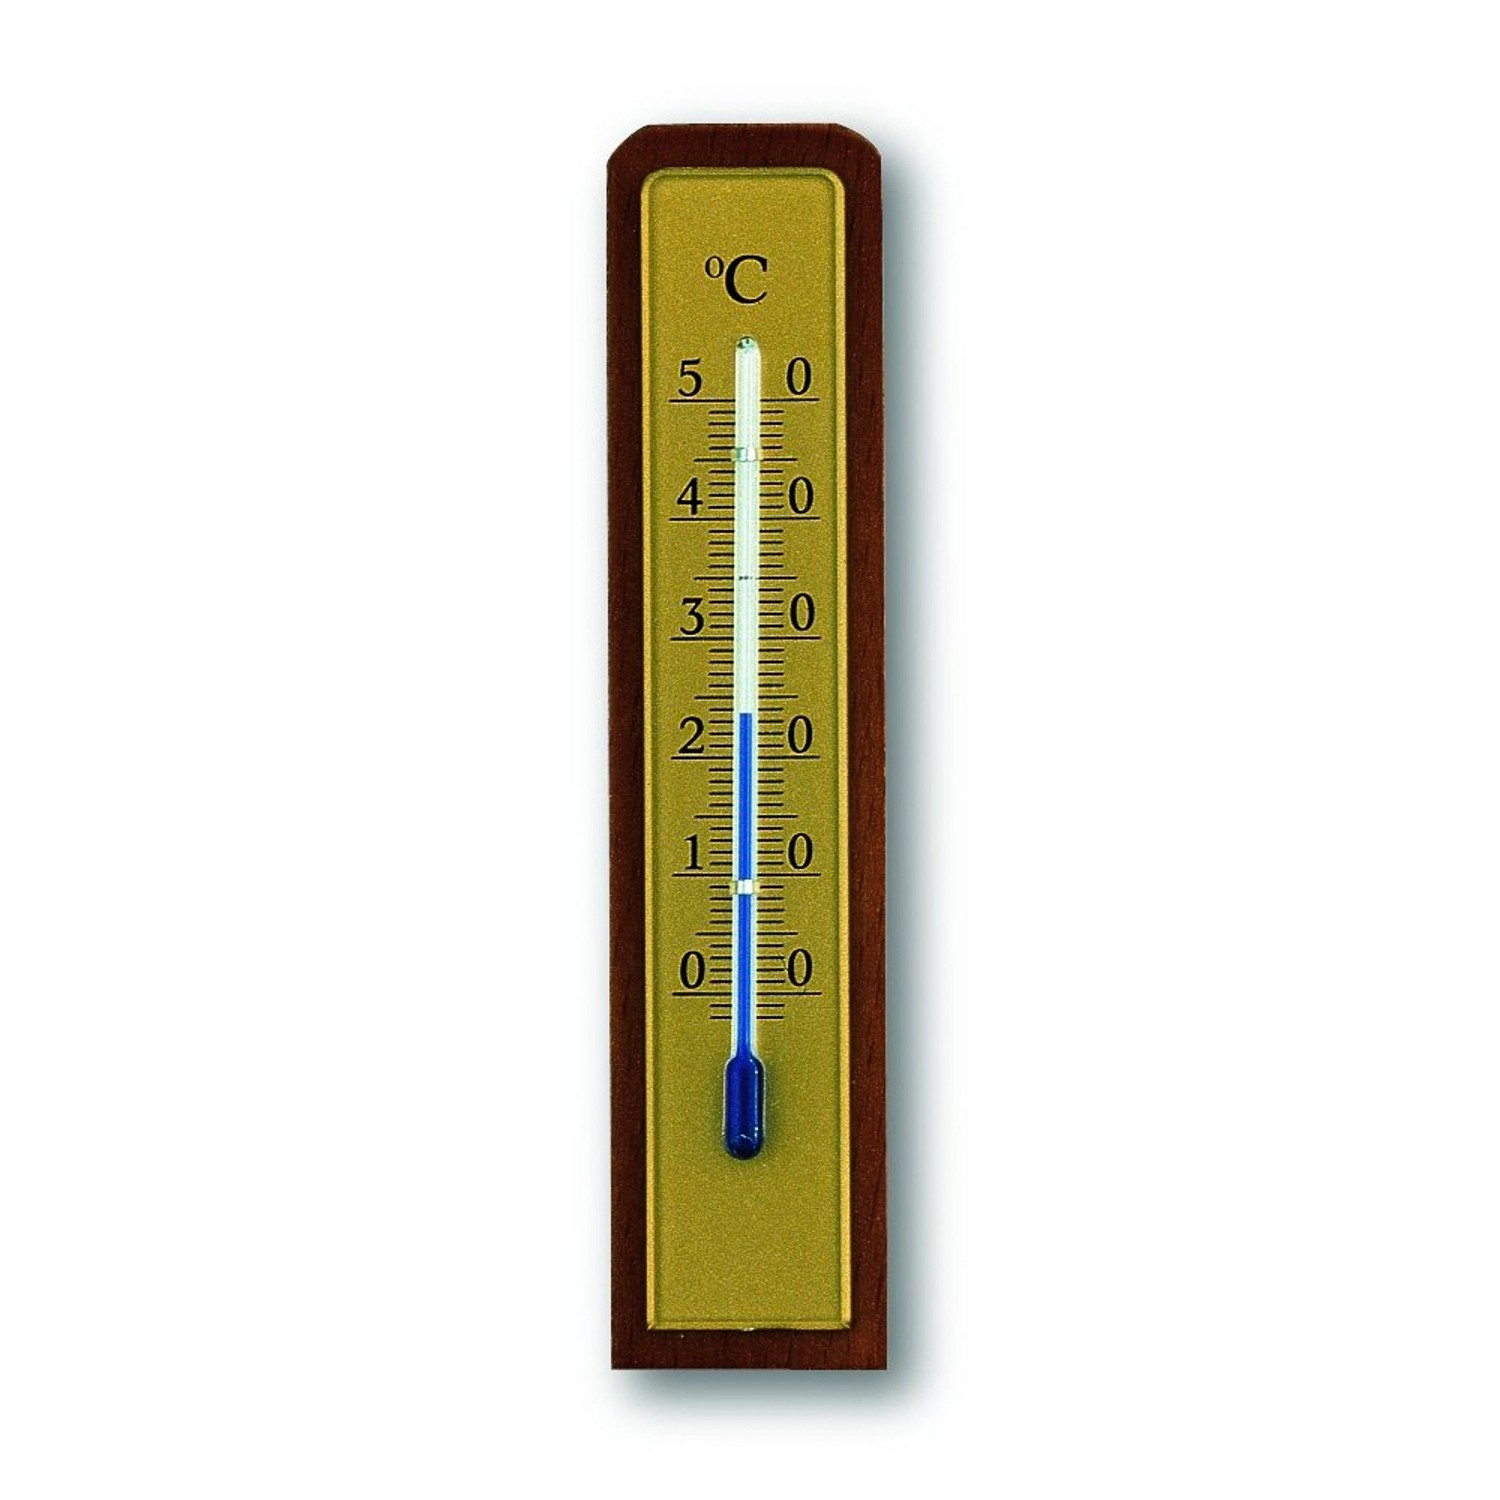 TFA Innen-Thermometer Nussbaum-Optik von TFA